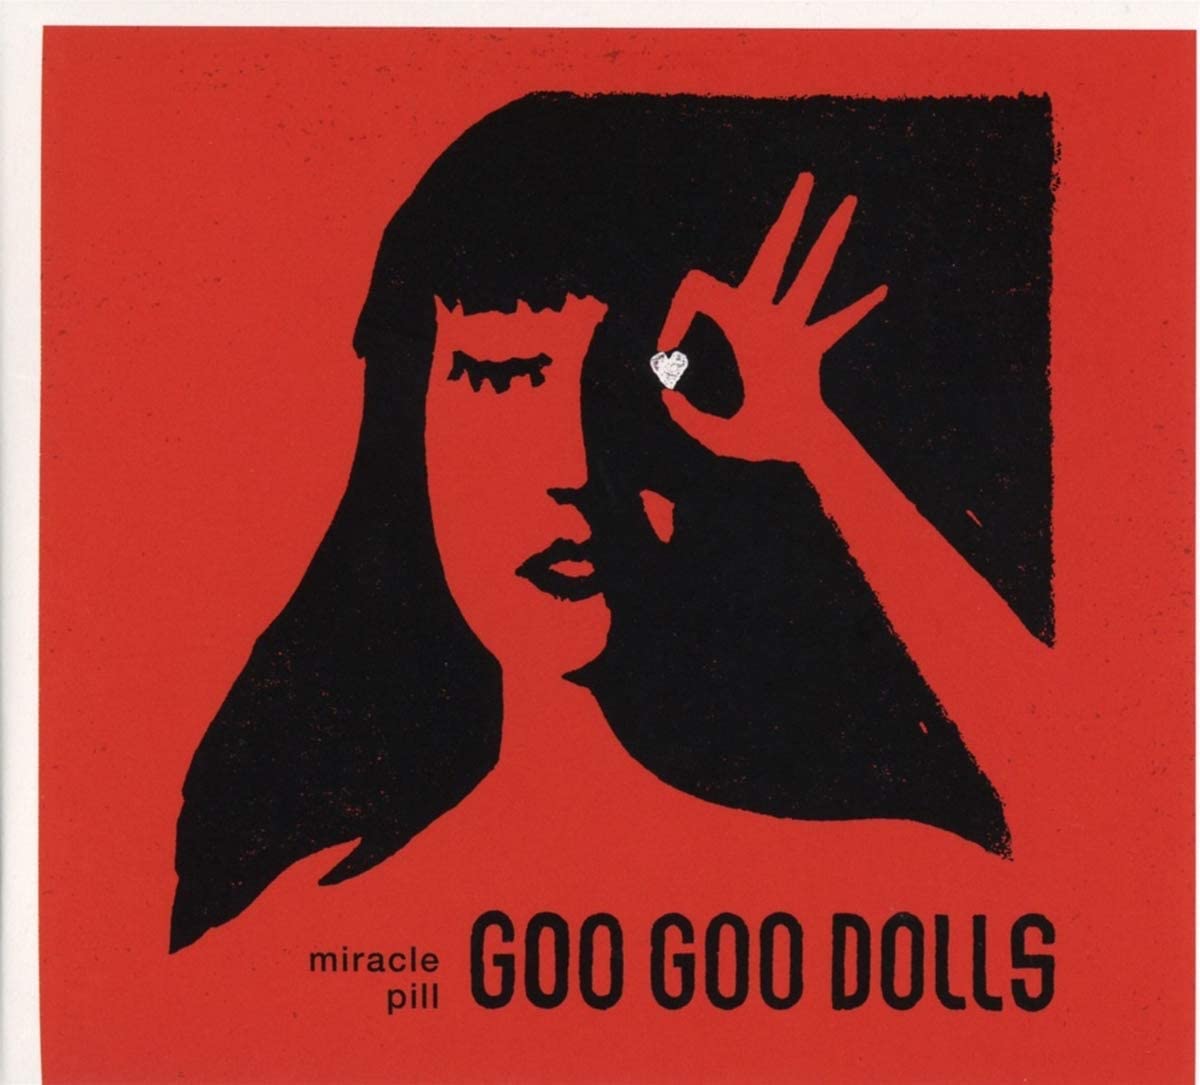 Miracle Pill: The Goo Goo Dolls: Amazon.ca: Music